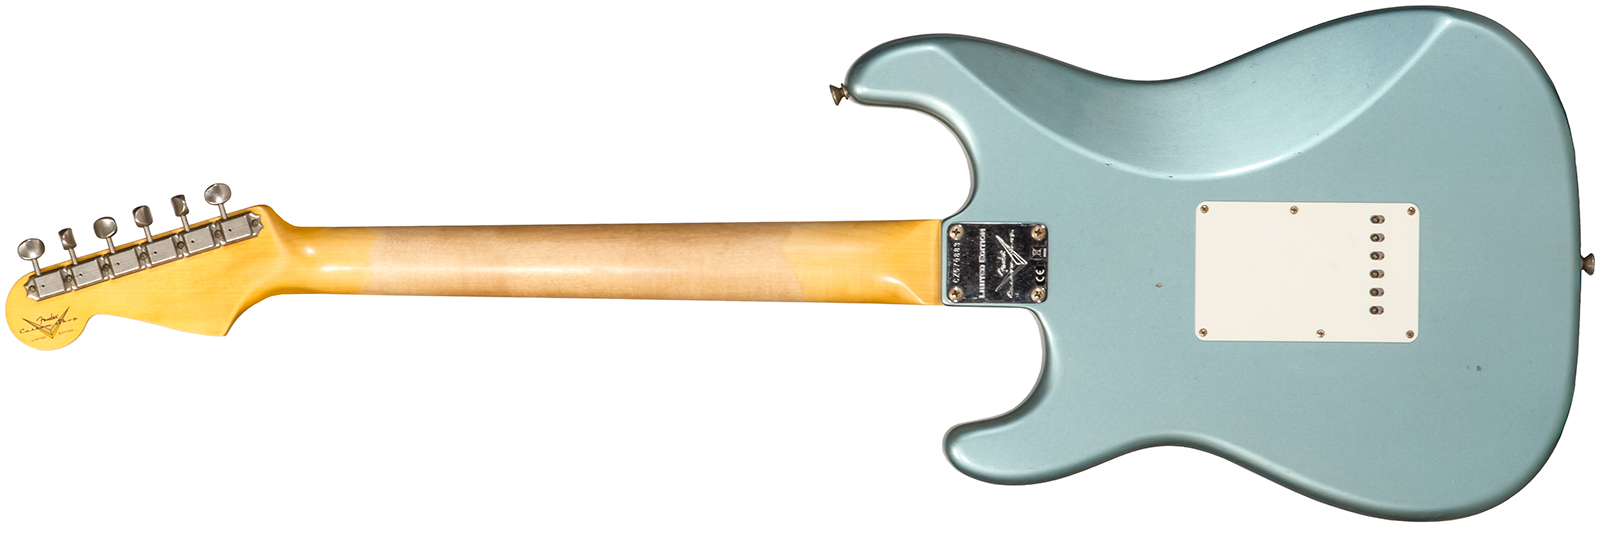 Fender Custom Shop Strat 1959 3s Trem Rw #cz570883 - Journeyman Relic Teal Green Metallic - Elektrische gitaar in Str-vorm - Variation 1